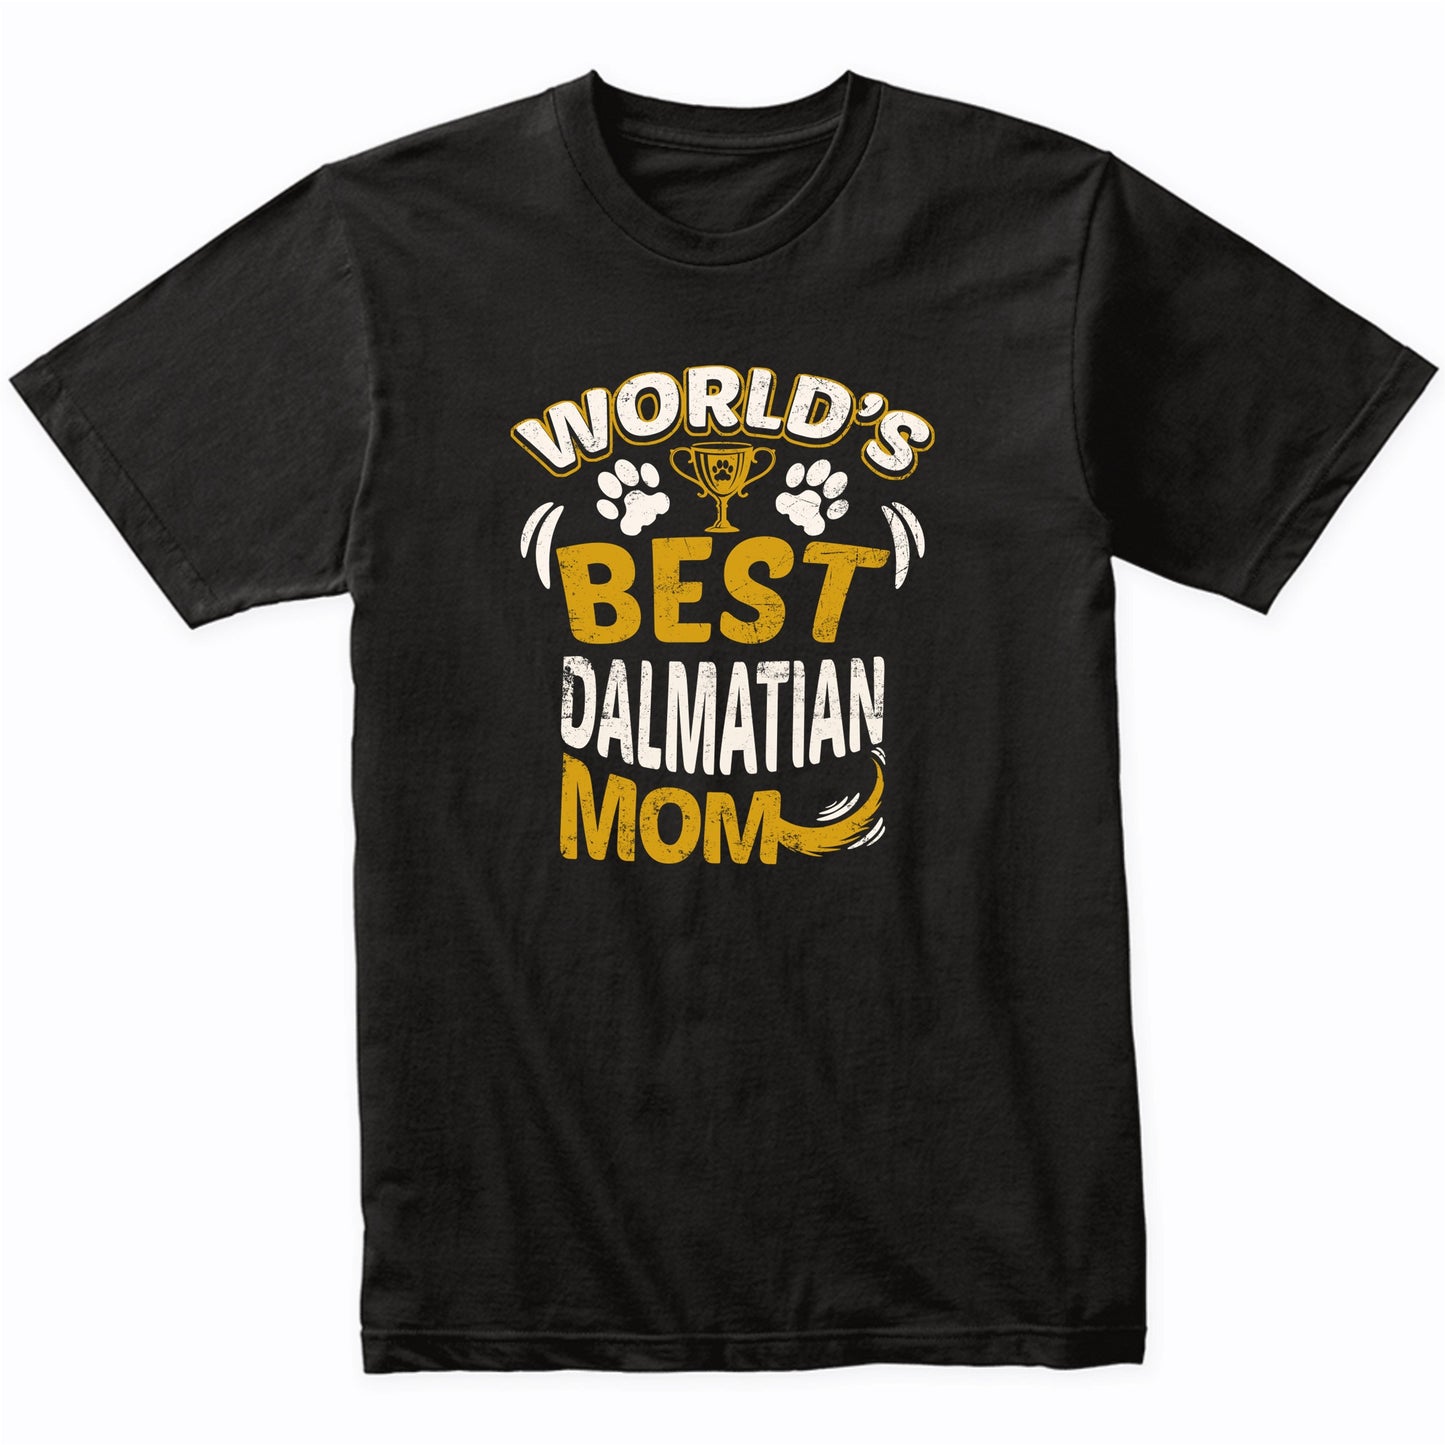 World's Best Dalmatian Mom Graphic T-Shirt